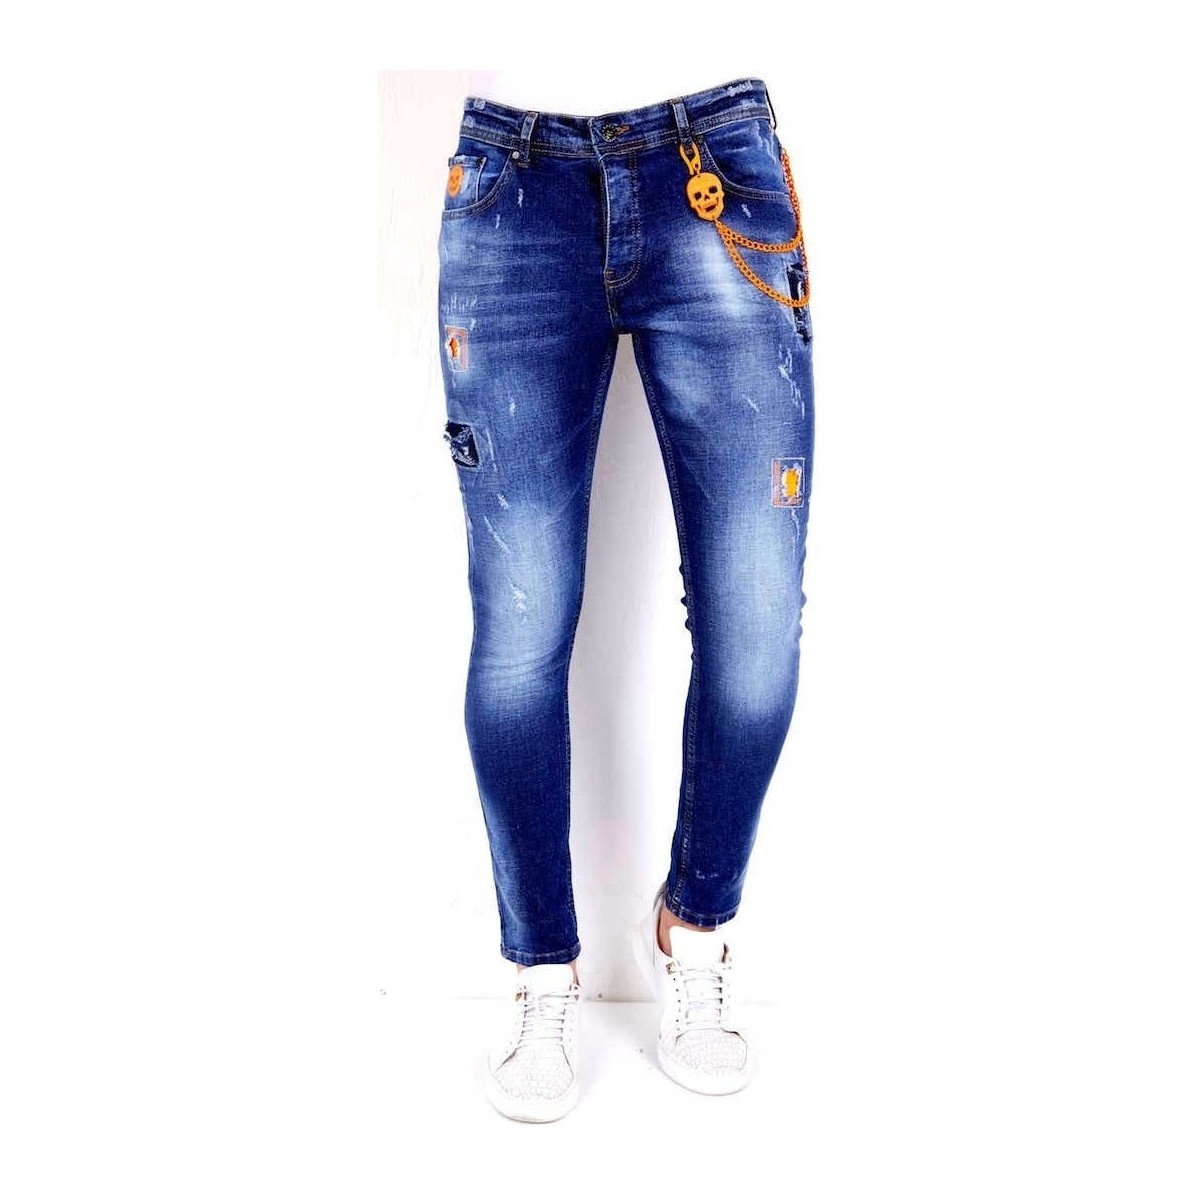 Kleidung Herren Slim Fit Jeans Local Fanatic Jeans Slim Destroyed Blau